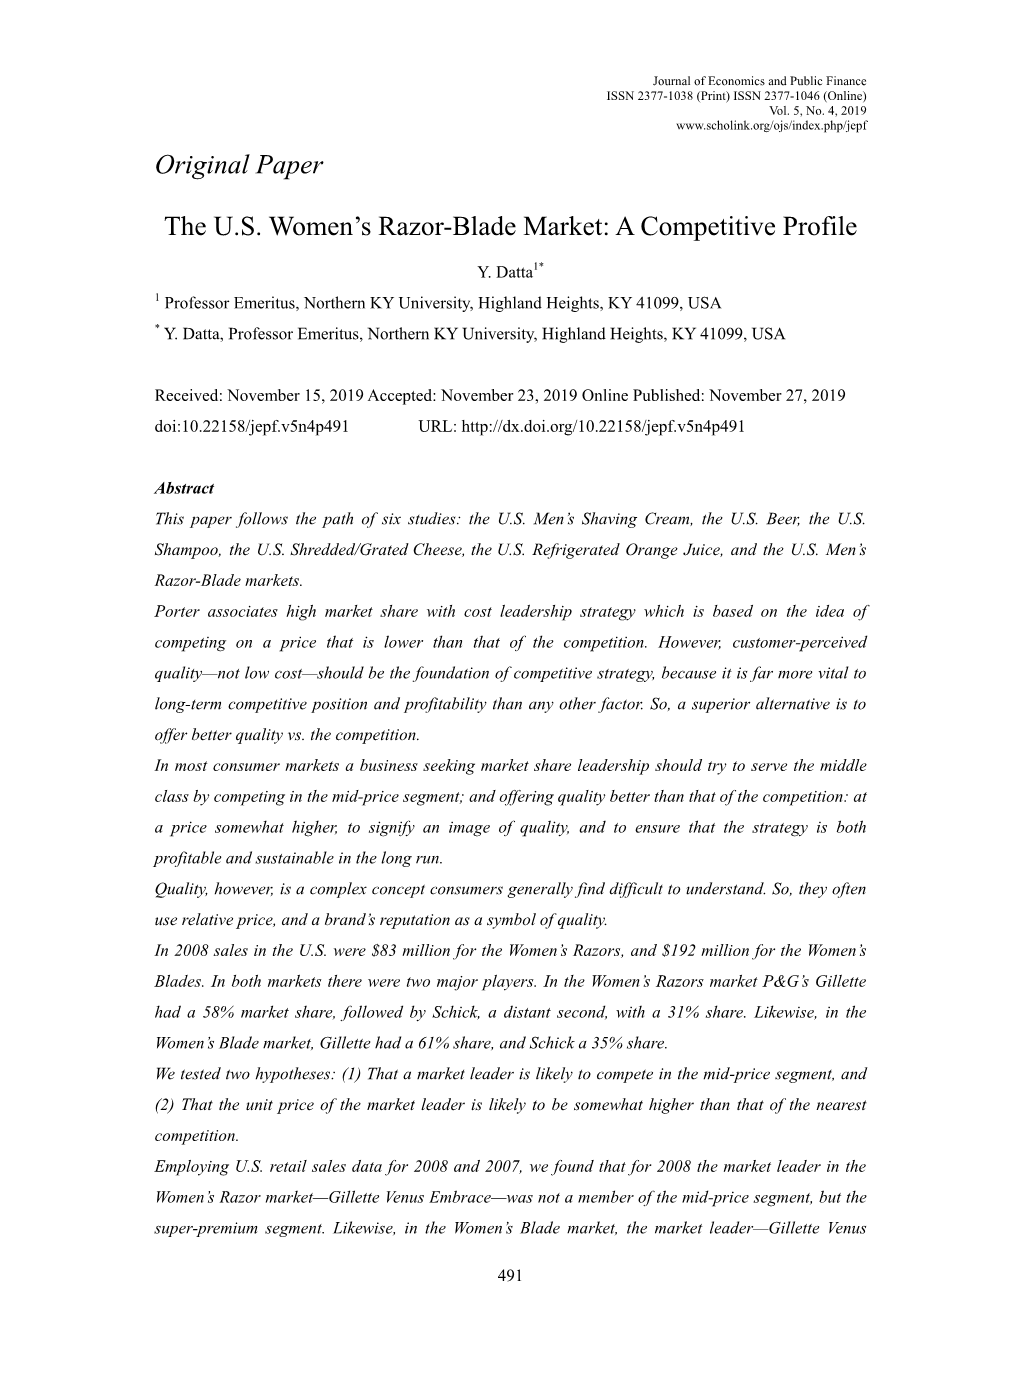 Original Paper the US Women's Razor-Blade Market: a Competitive